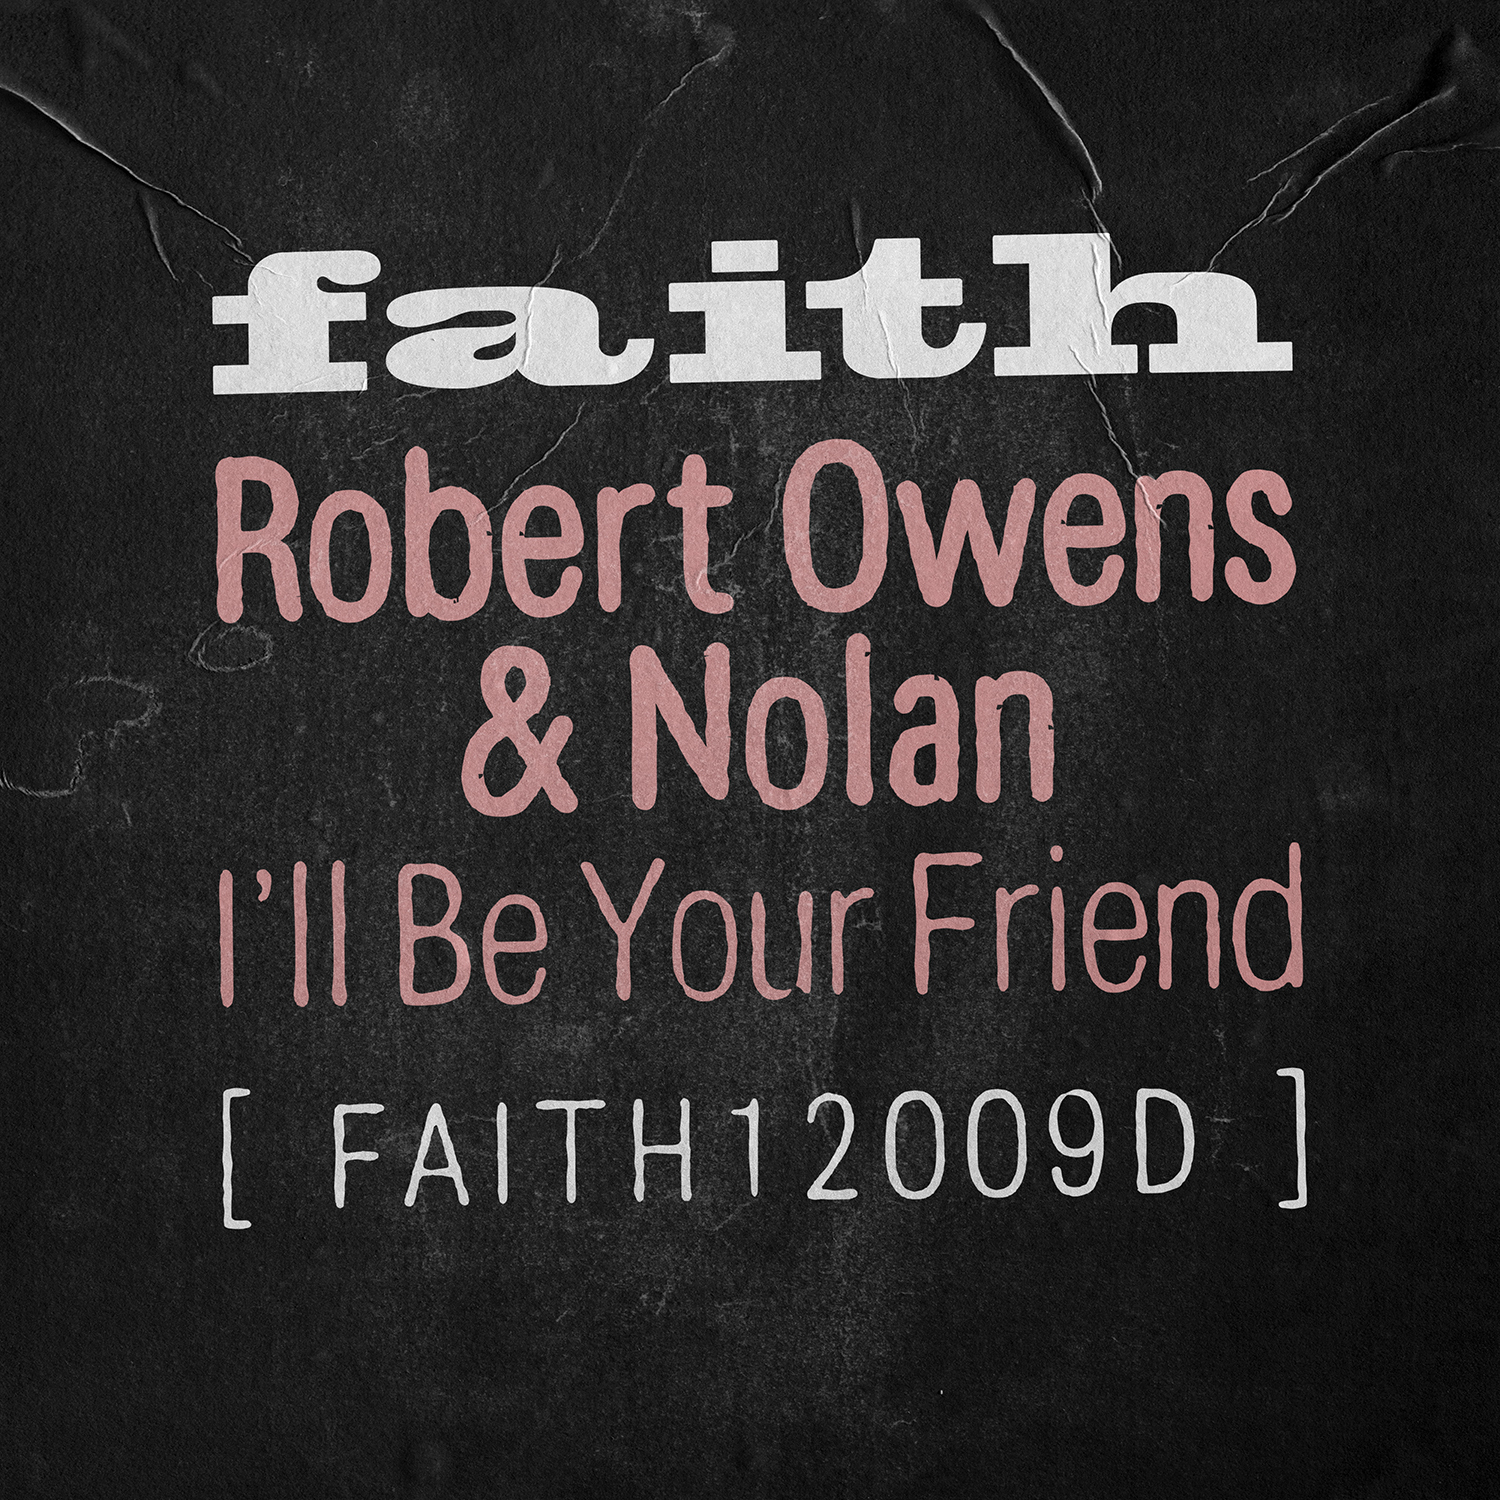 Robert Owens & Nolan